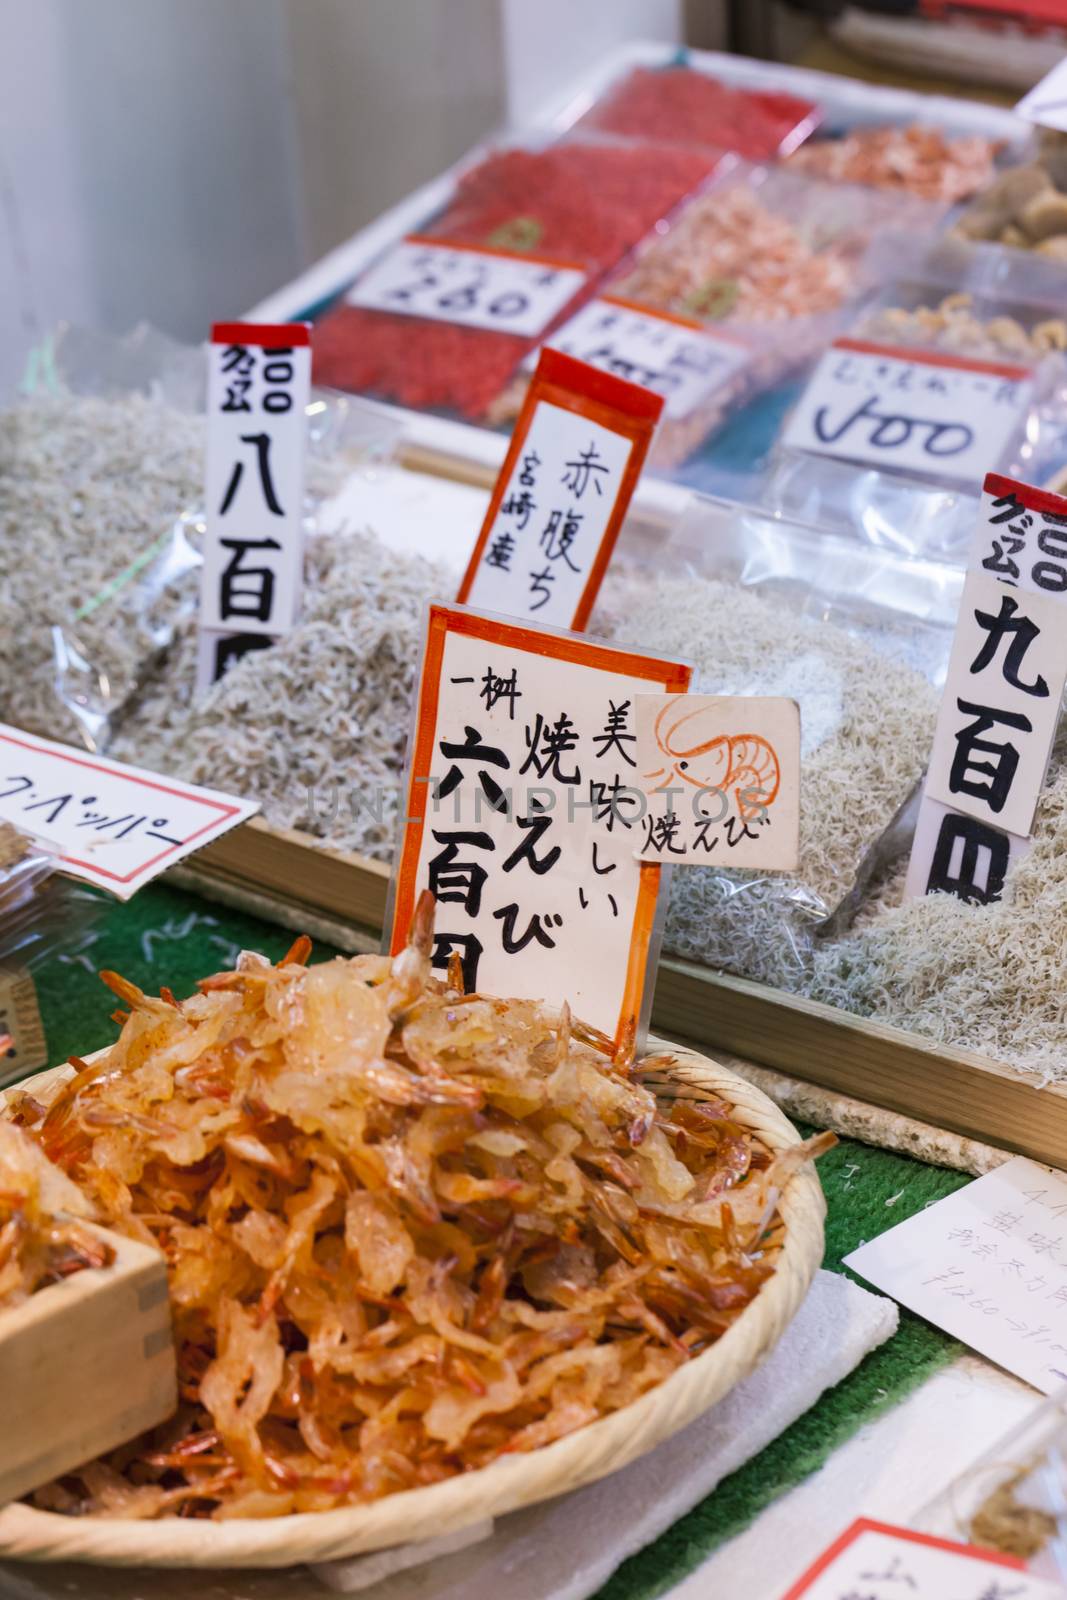 Traditional food market in Kyoto. Japan. by mariusz_prusaczyk